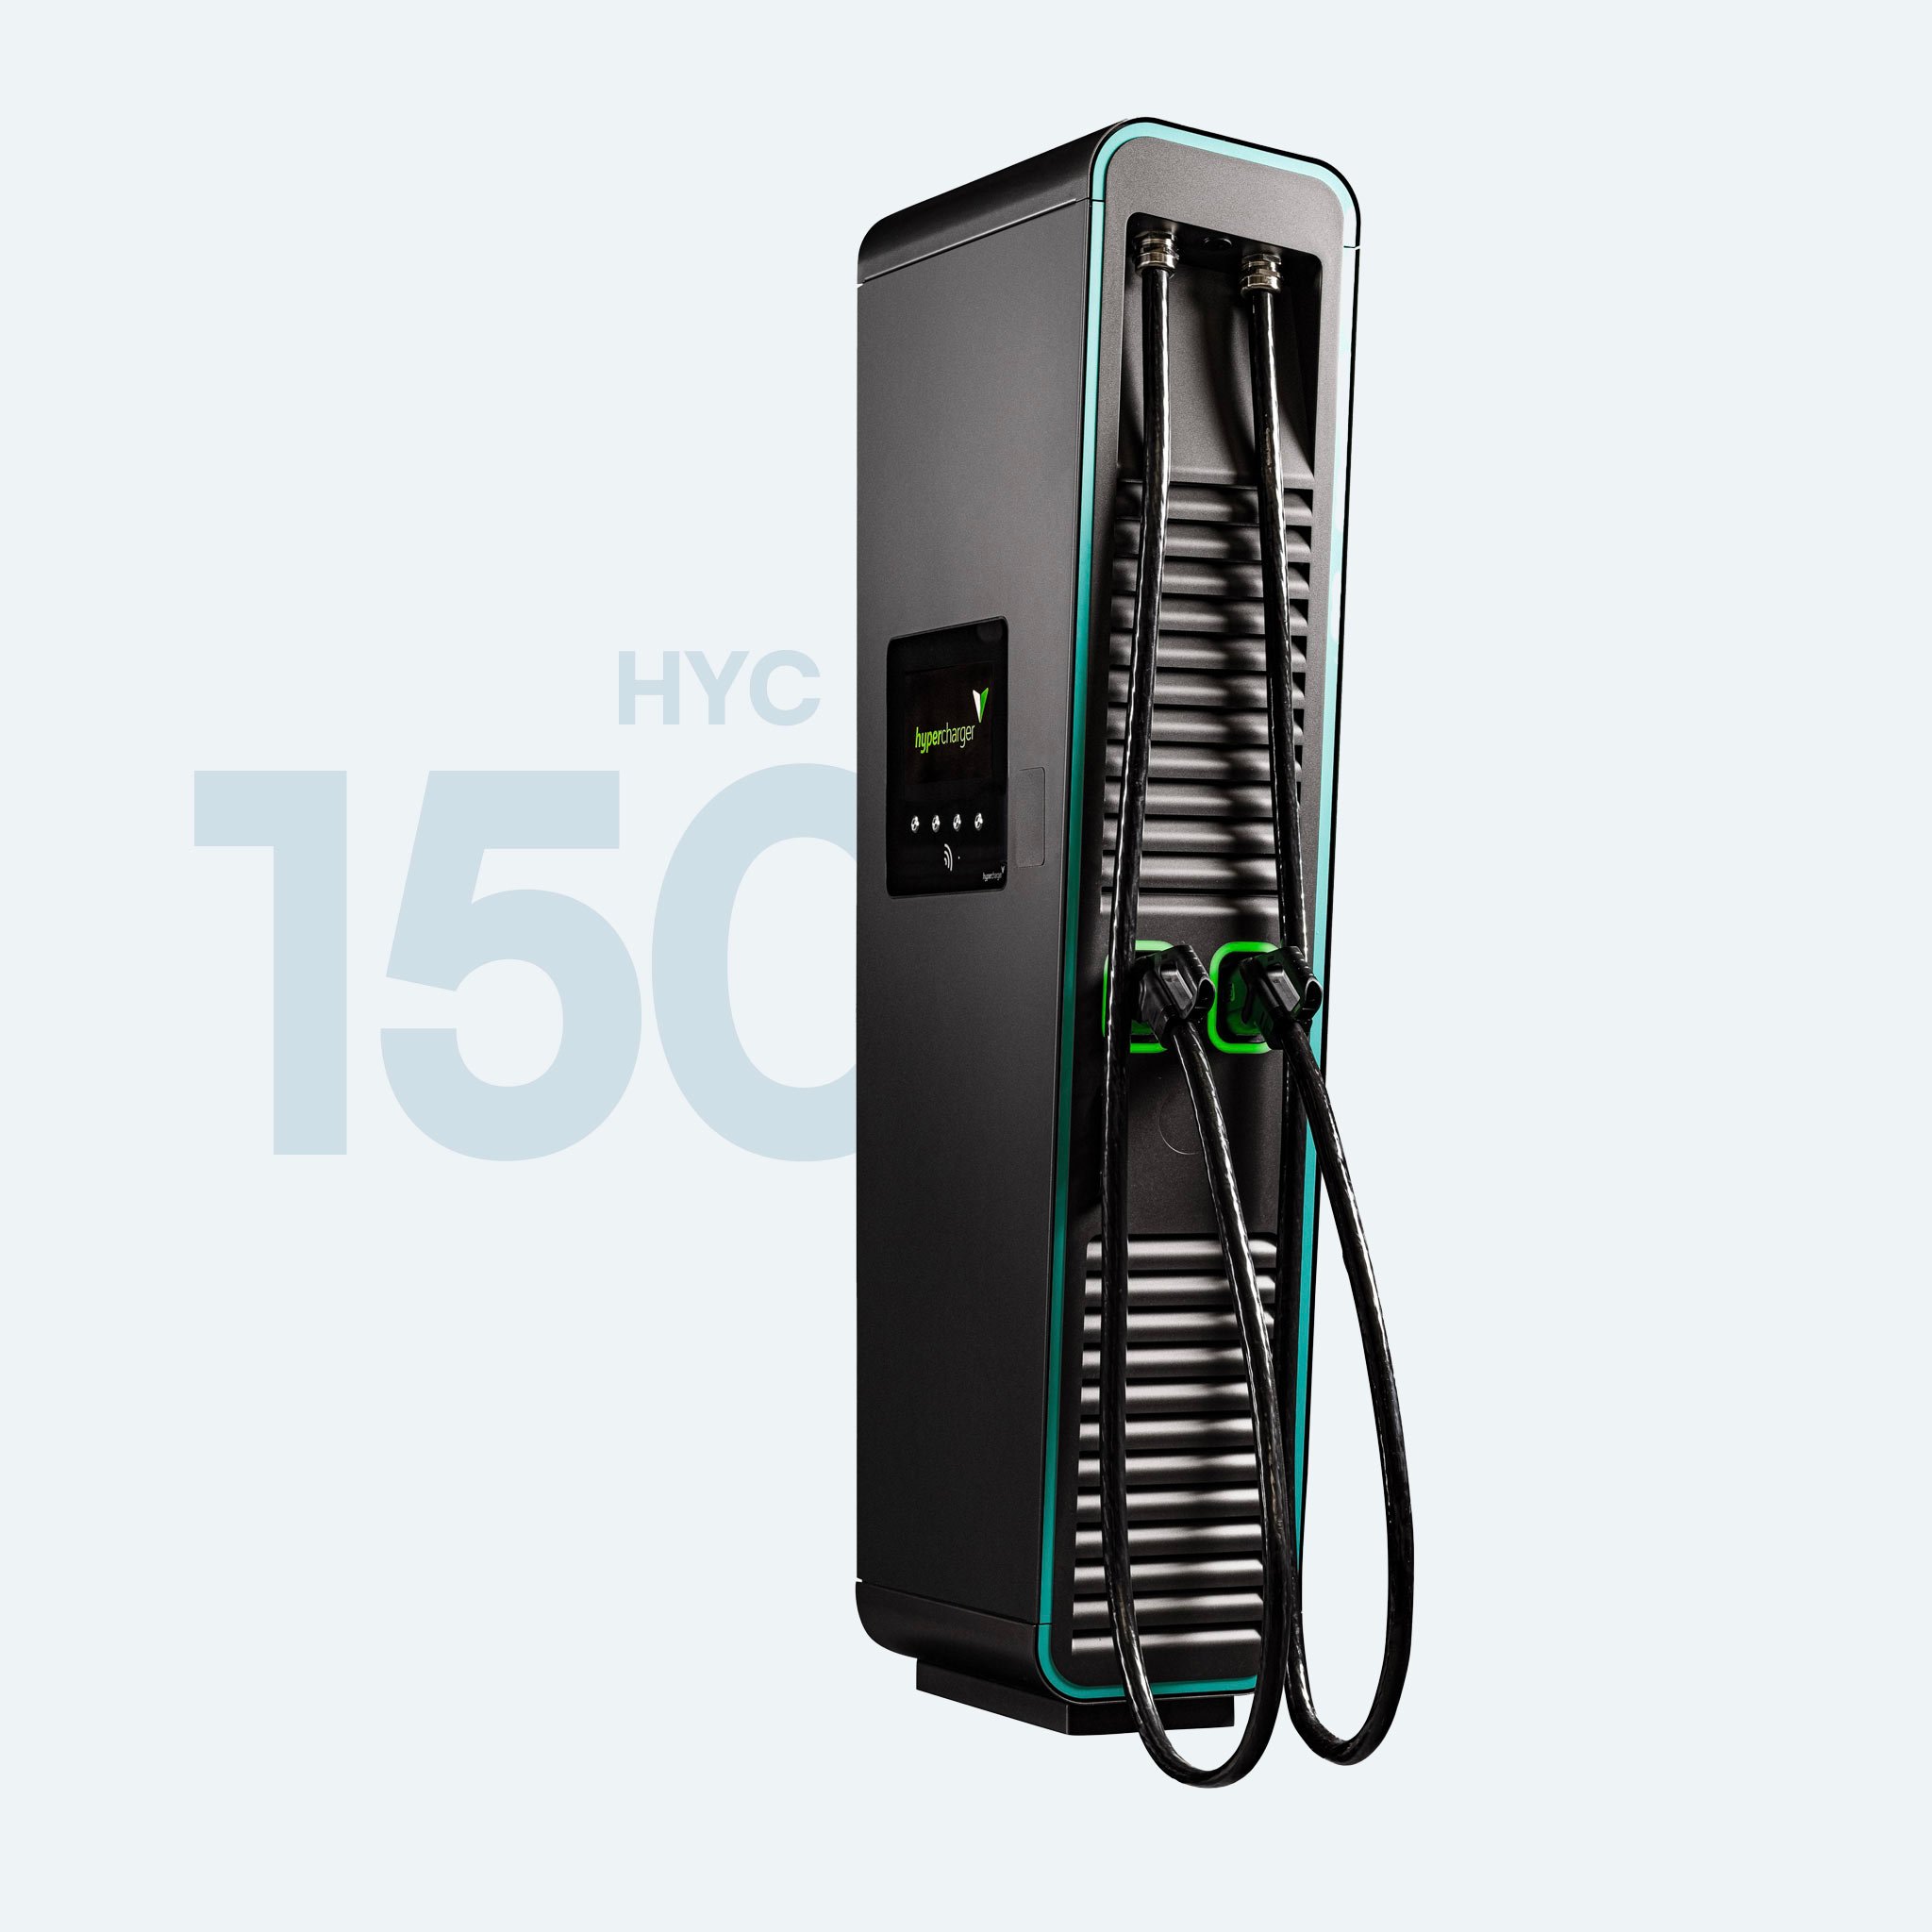 alpitronic hypercharger HYC 150 Schnellladestation - Individuell konfigurierbar